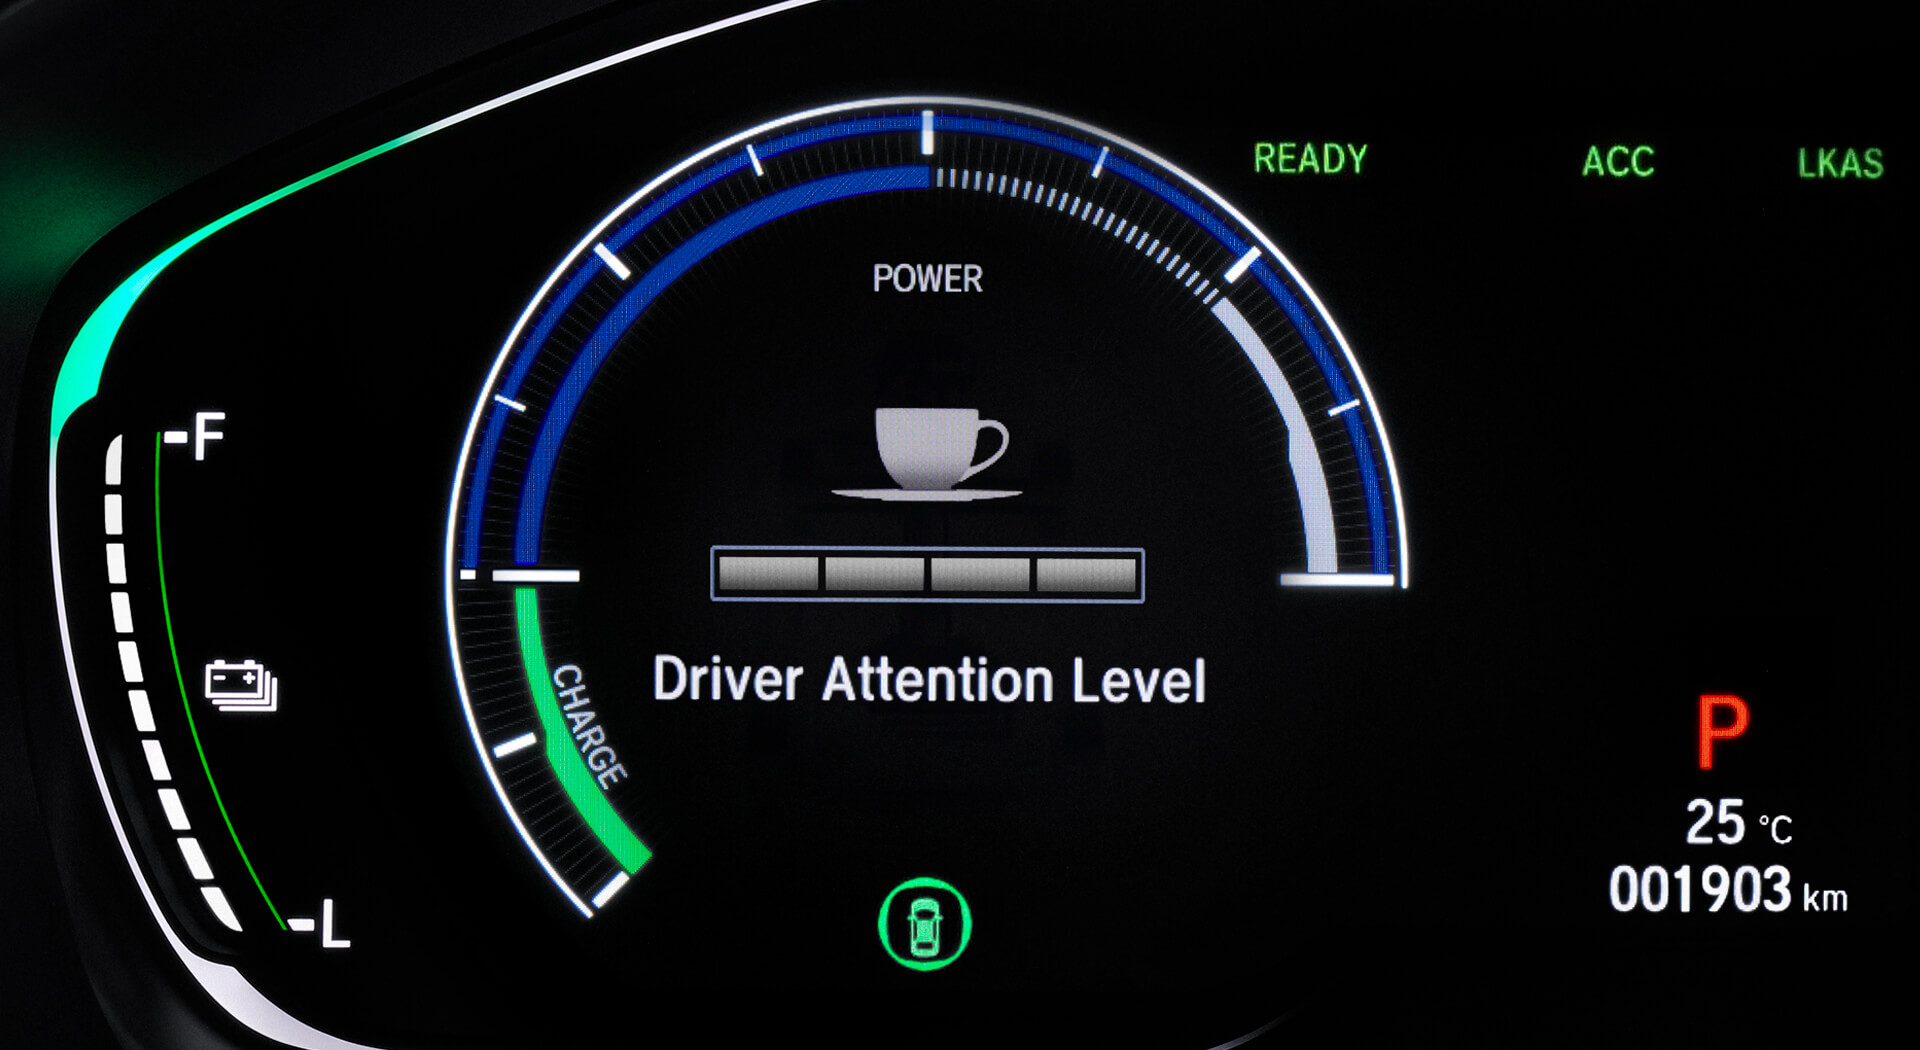 Driver Attention Monitor ระบบช่วยเตือนความเหนื่อยล้าขณะขับขี่ ระบบจะตรวจจับความเหนื่อยล้าของผู้ขับขี่ผ่านการควบคุมพวงมาลัย